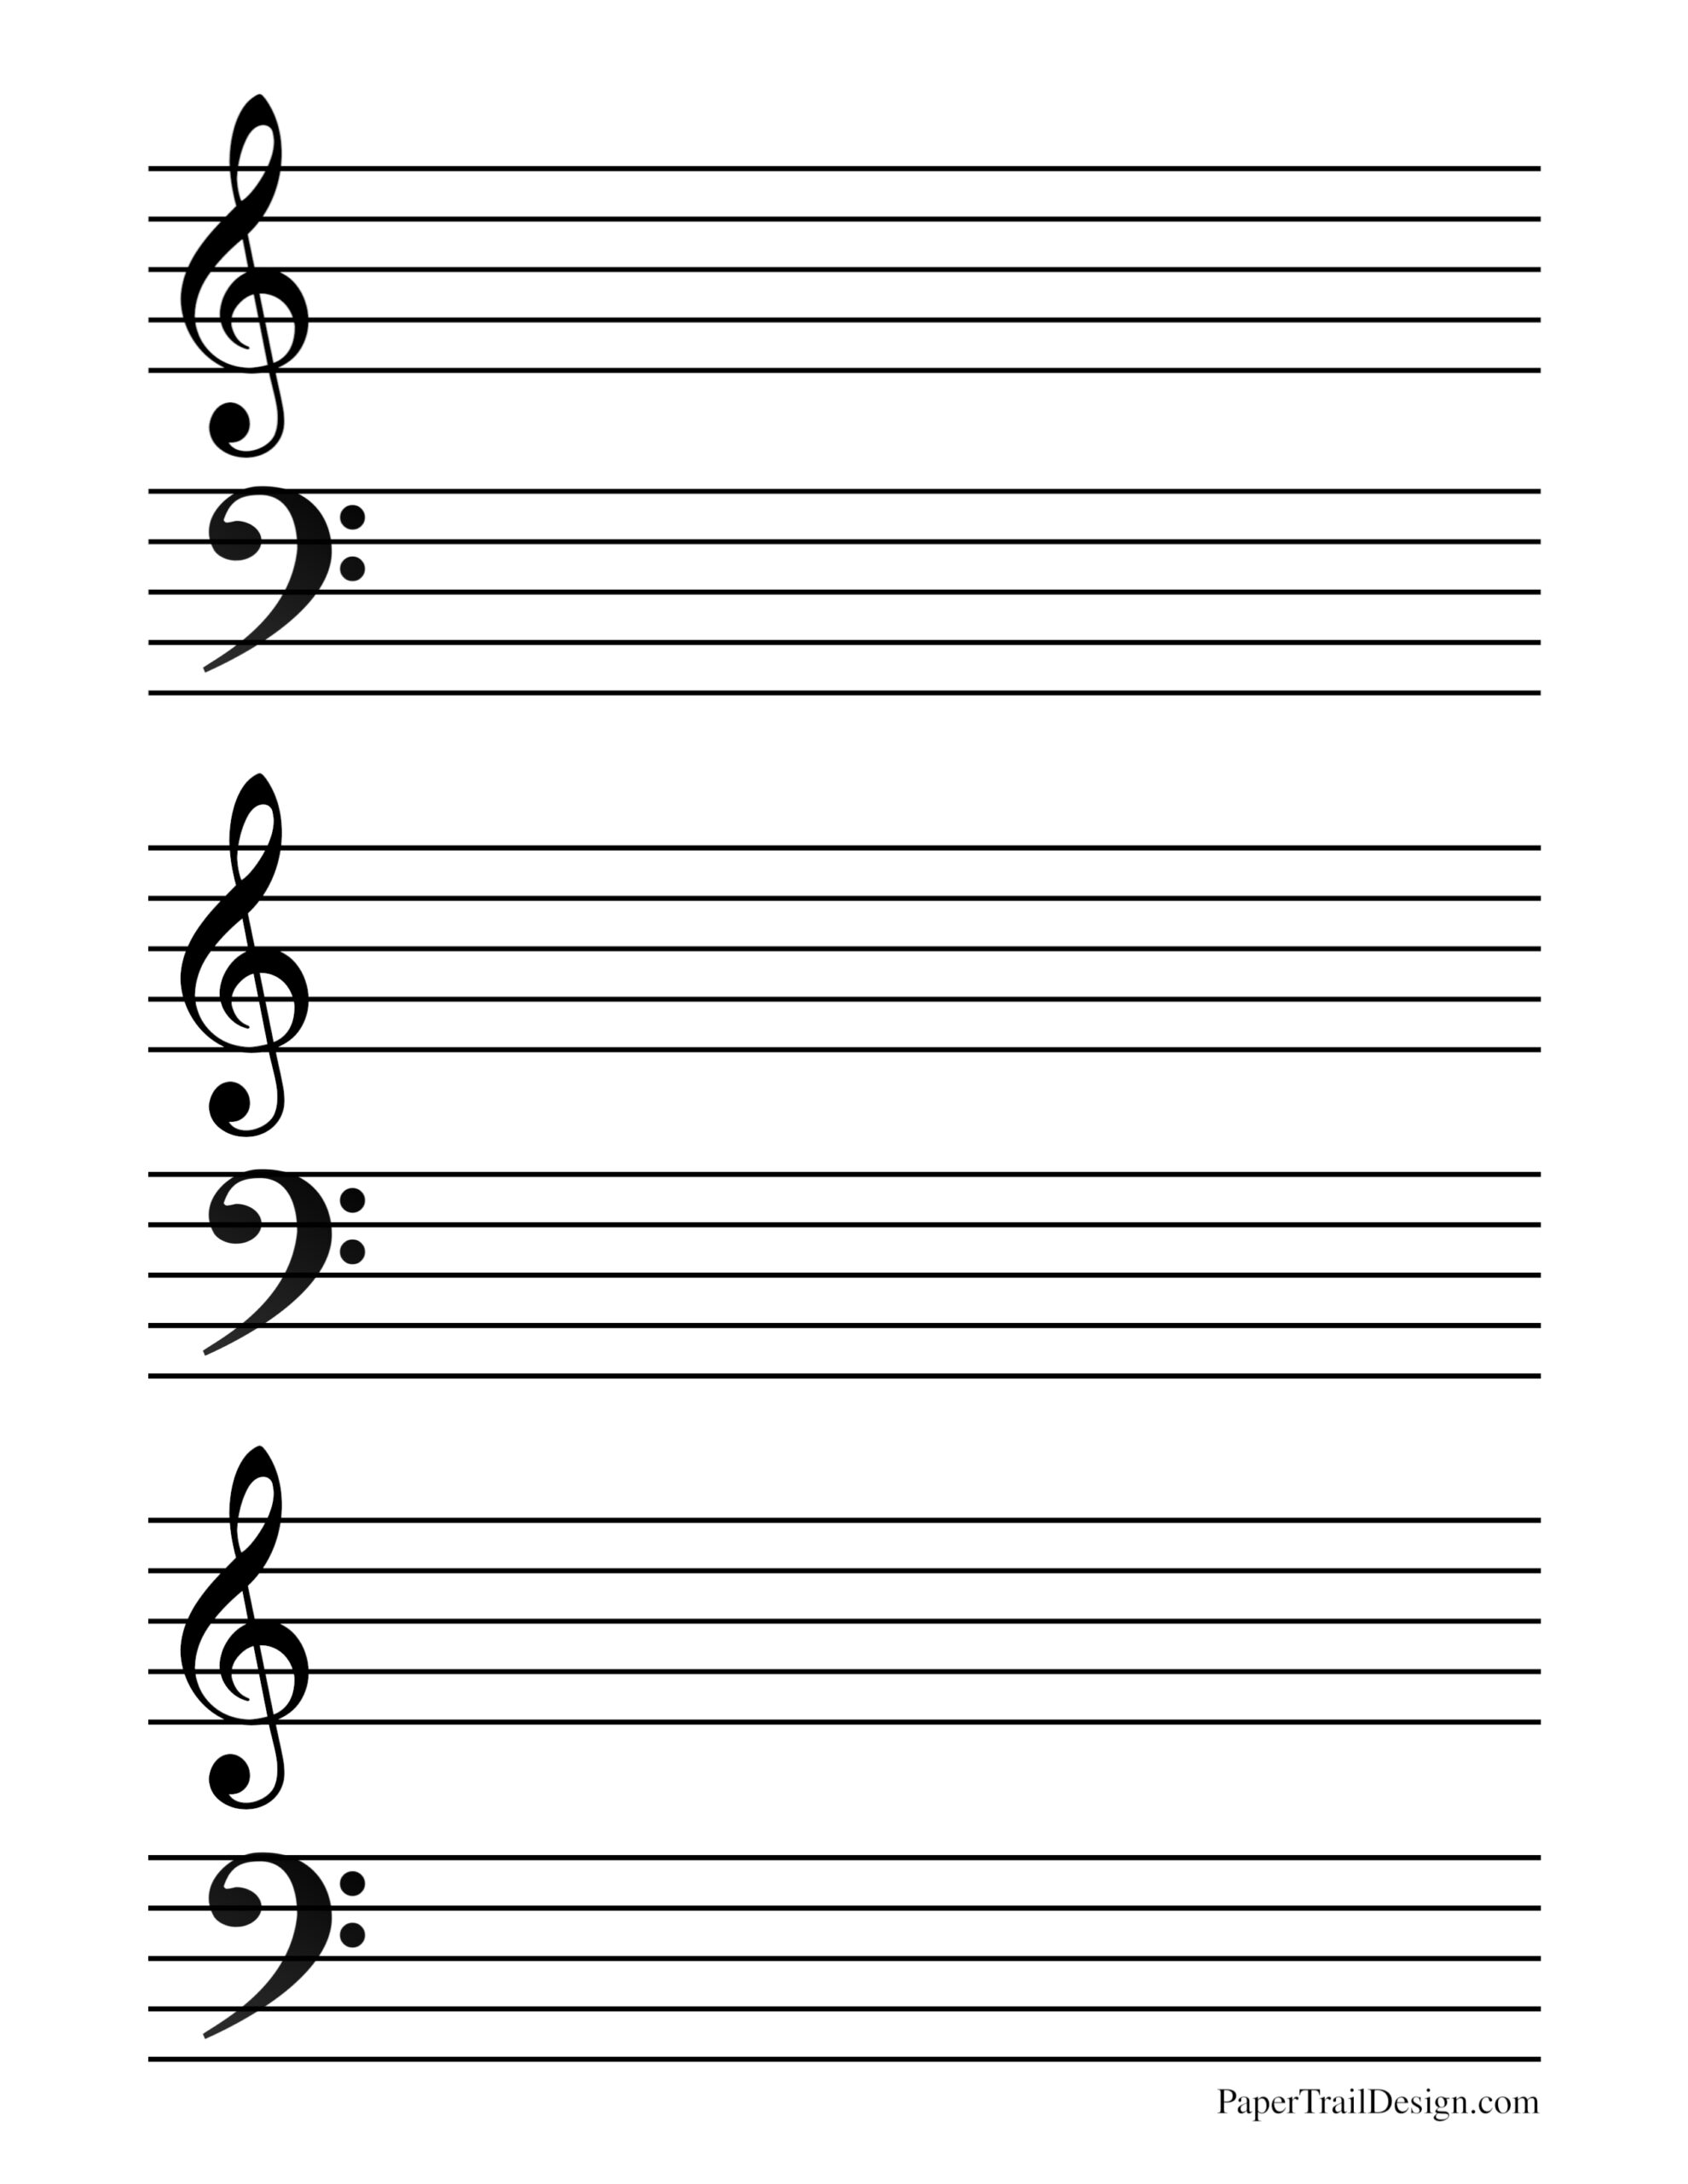 free printable bass clef manuscript paper